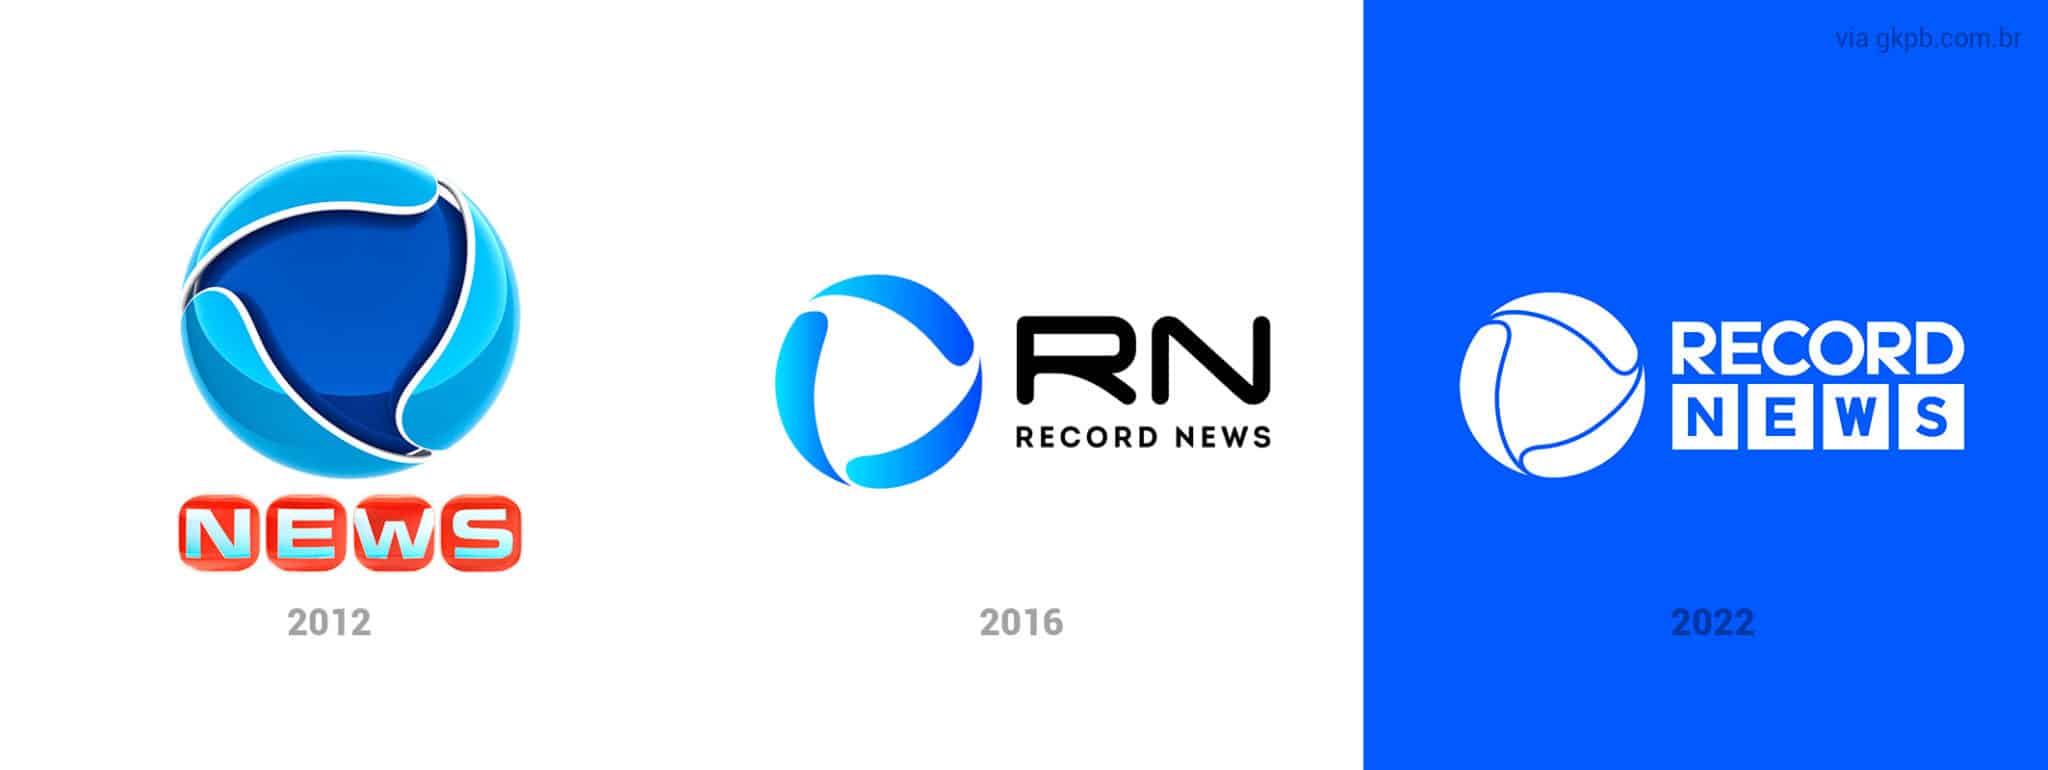 Record News Apresenta Novo Logo E Nova Identidade Visual Gkpb Geek